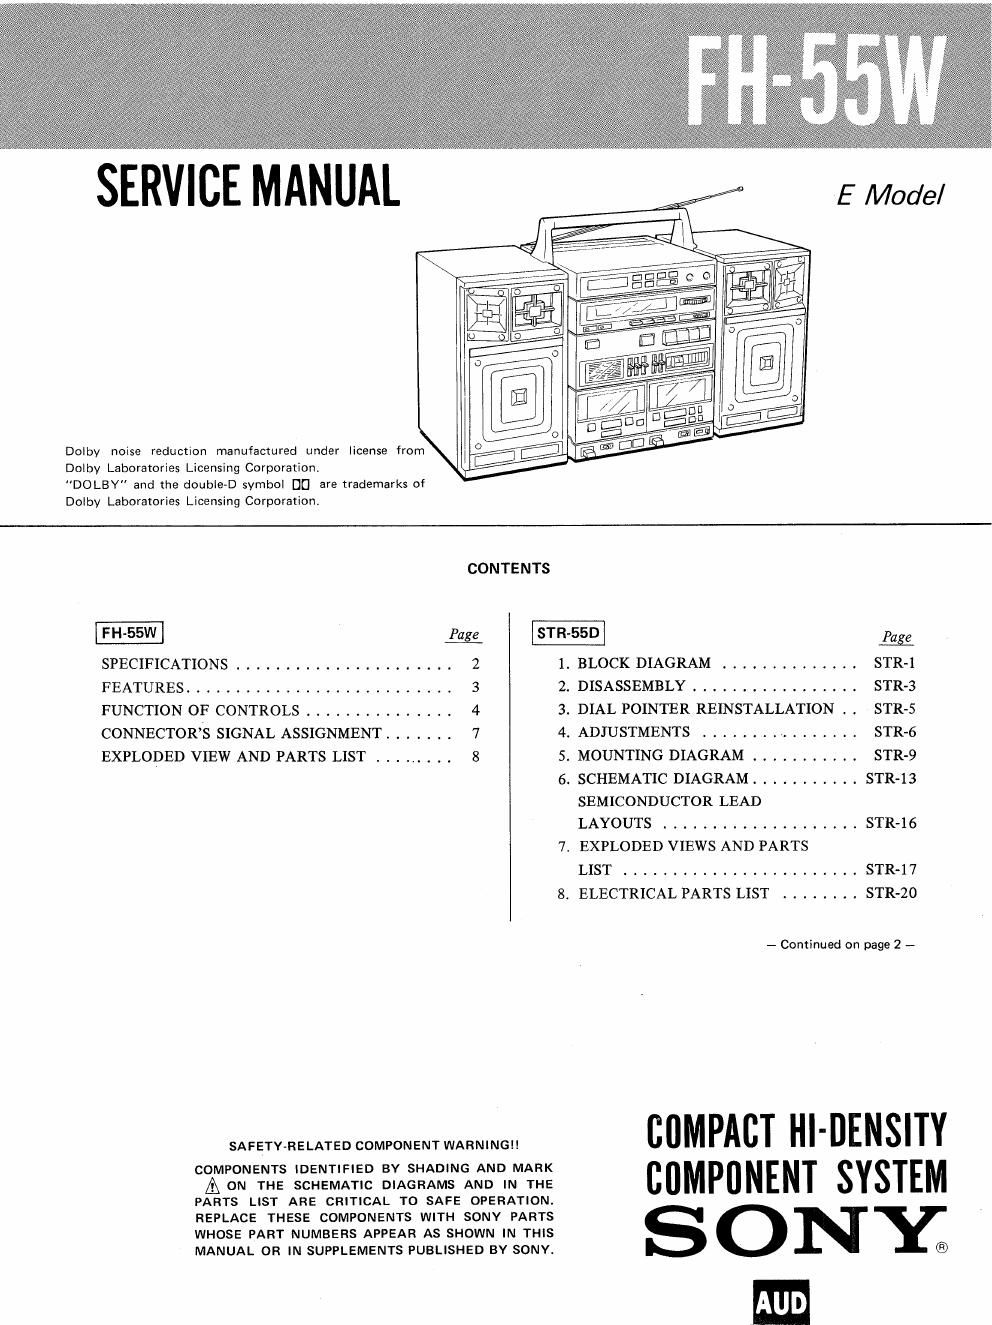 sony fh 55 w service manual